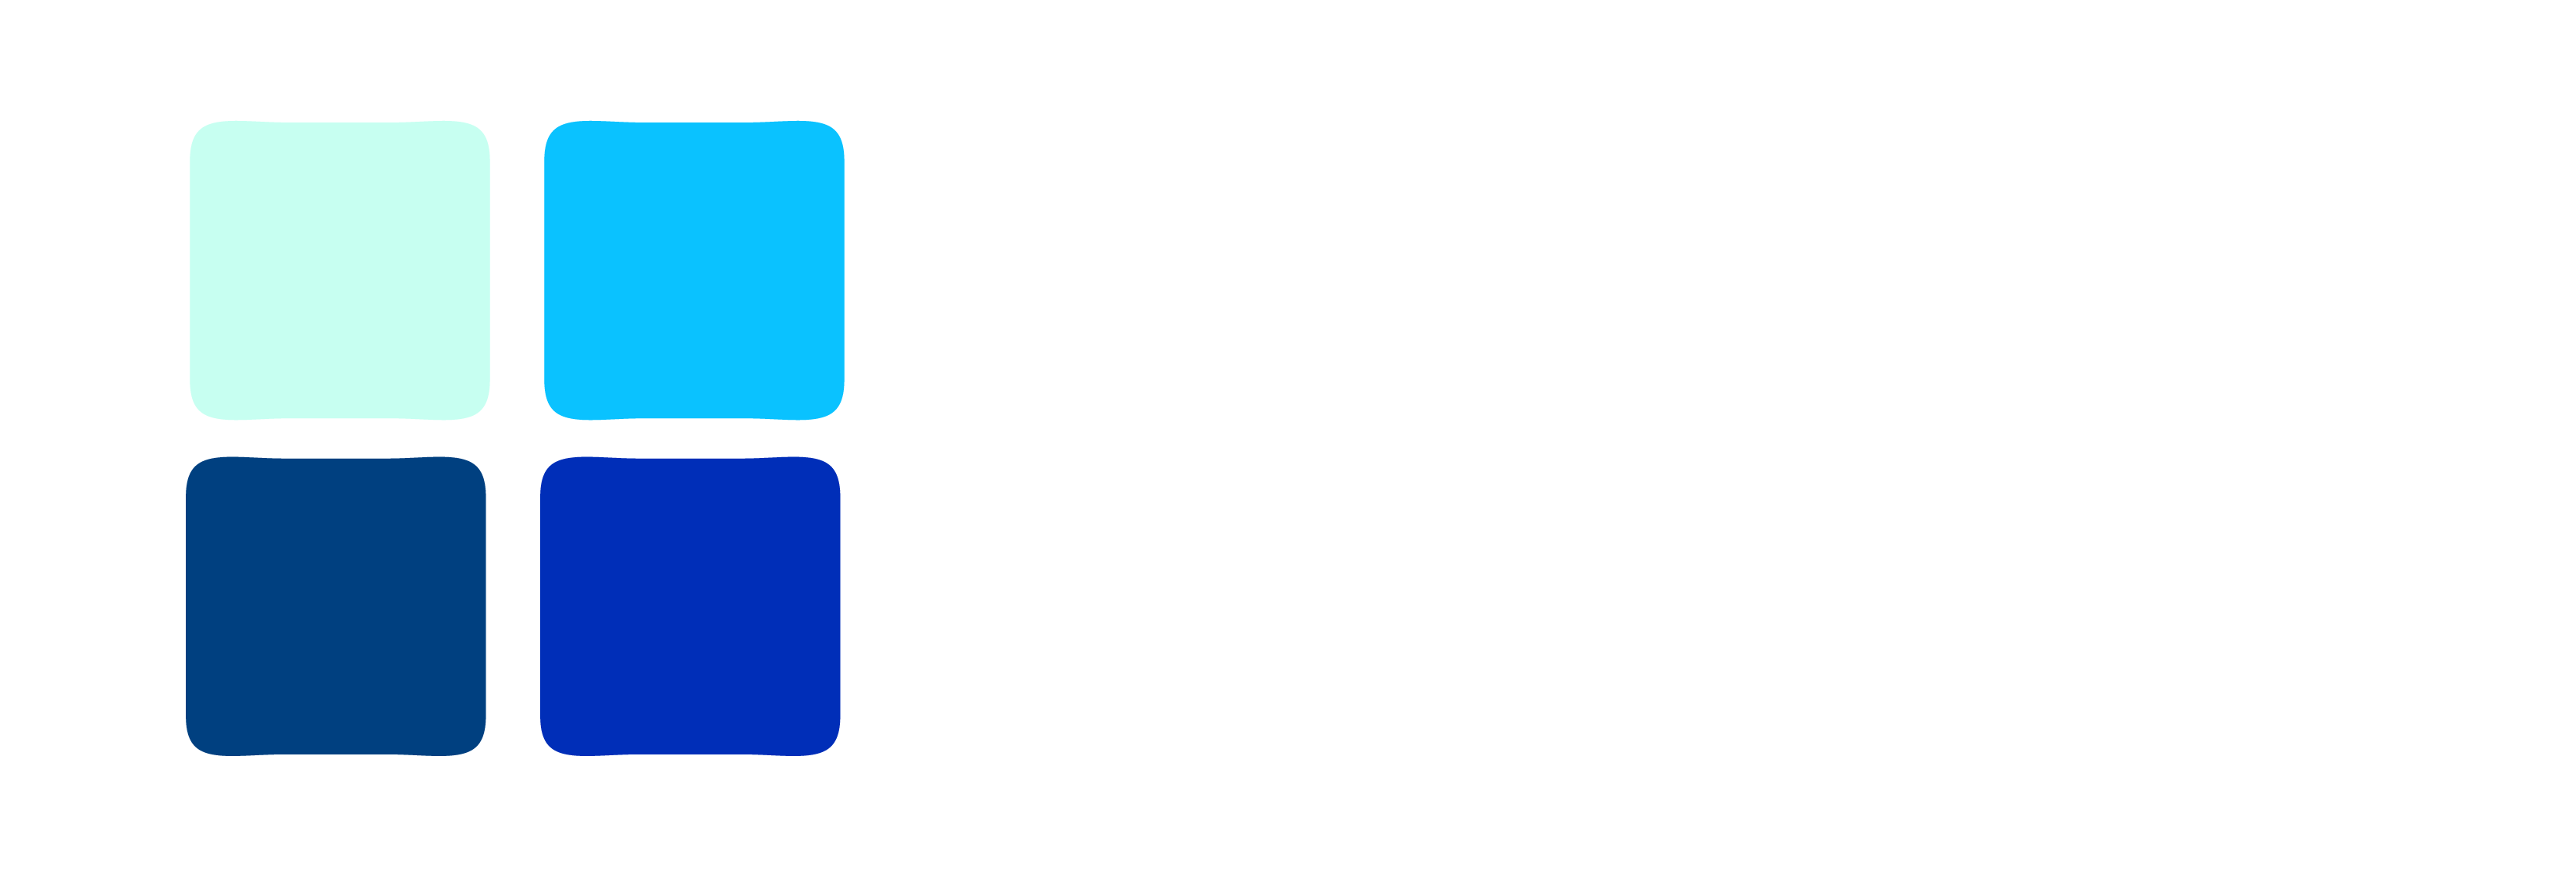 eqwipt logo-02